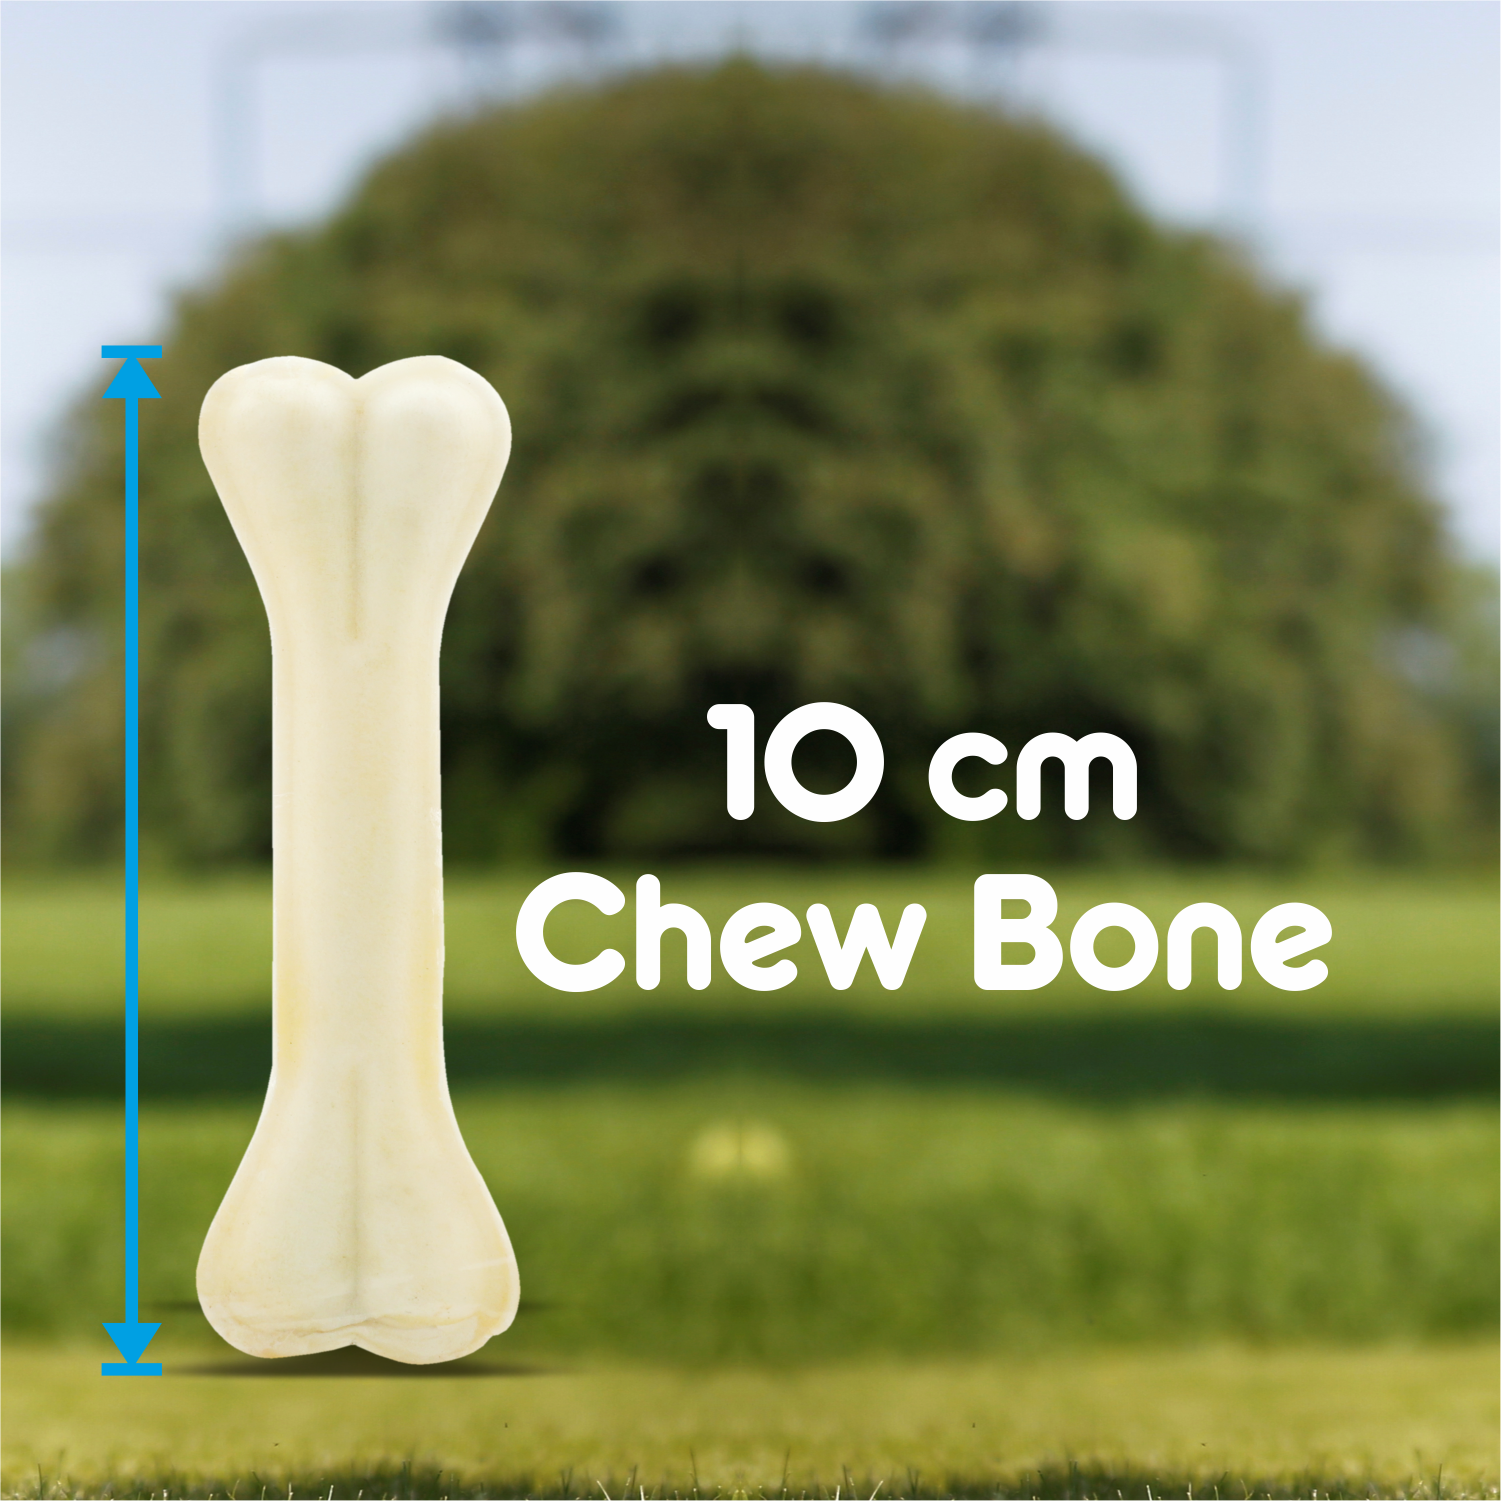 Purepet Chew Bone Dog Treats